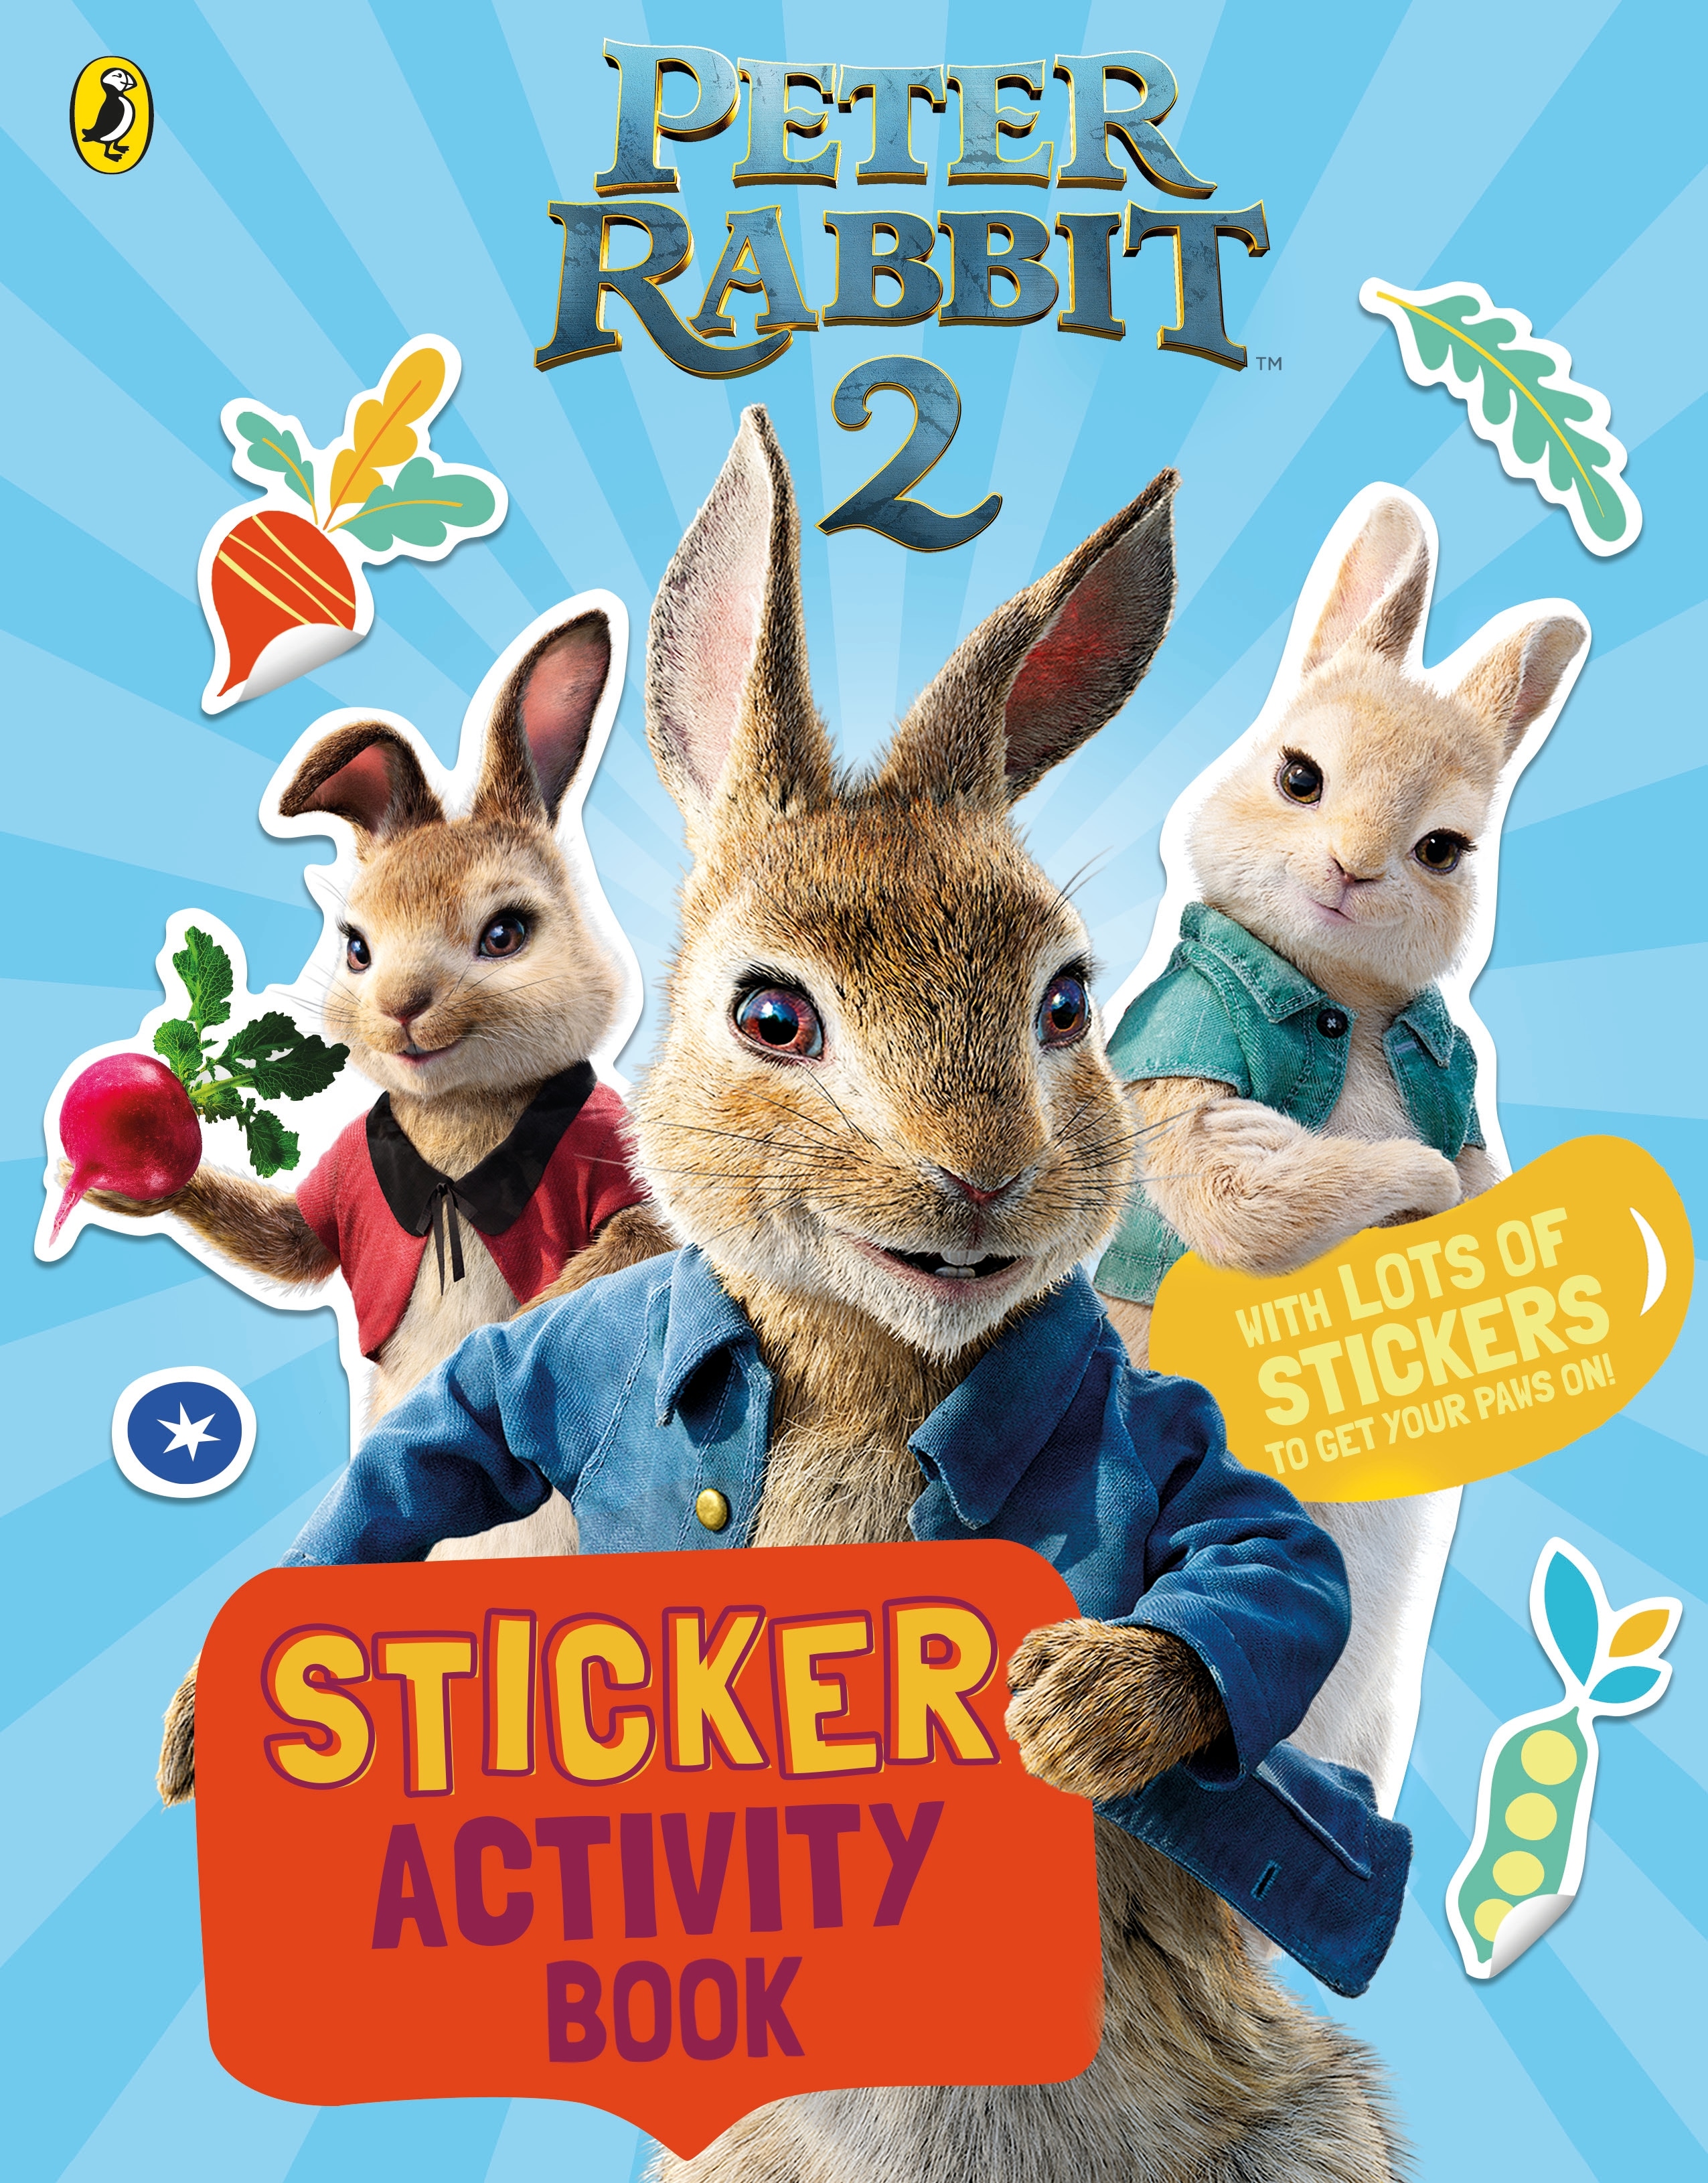 Book “Peter Rabbit Movie 2 Sticker Activity Book” by Beatrix Potter — January 23, 2020